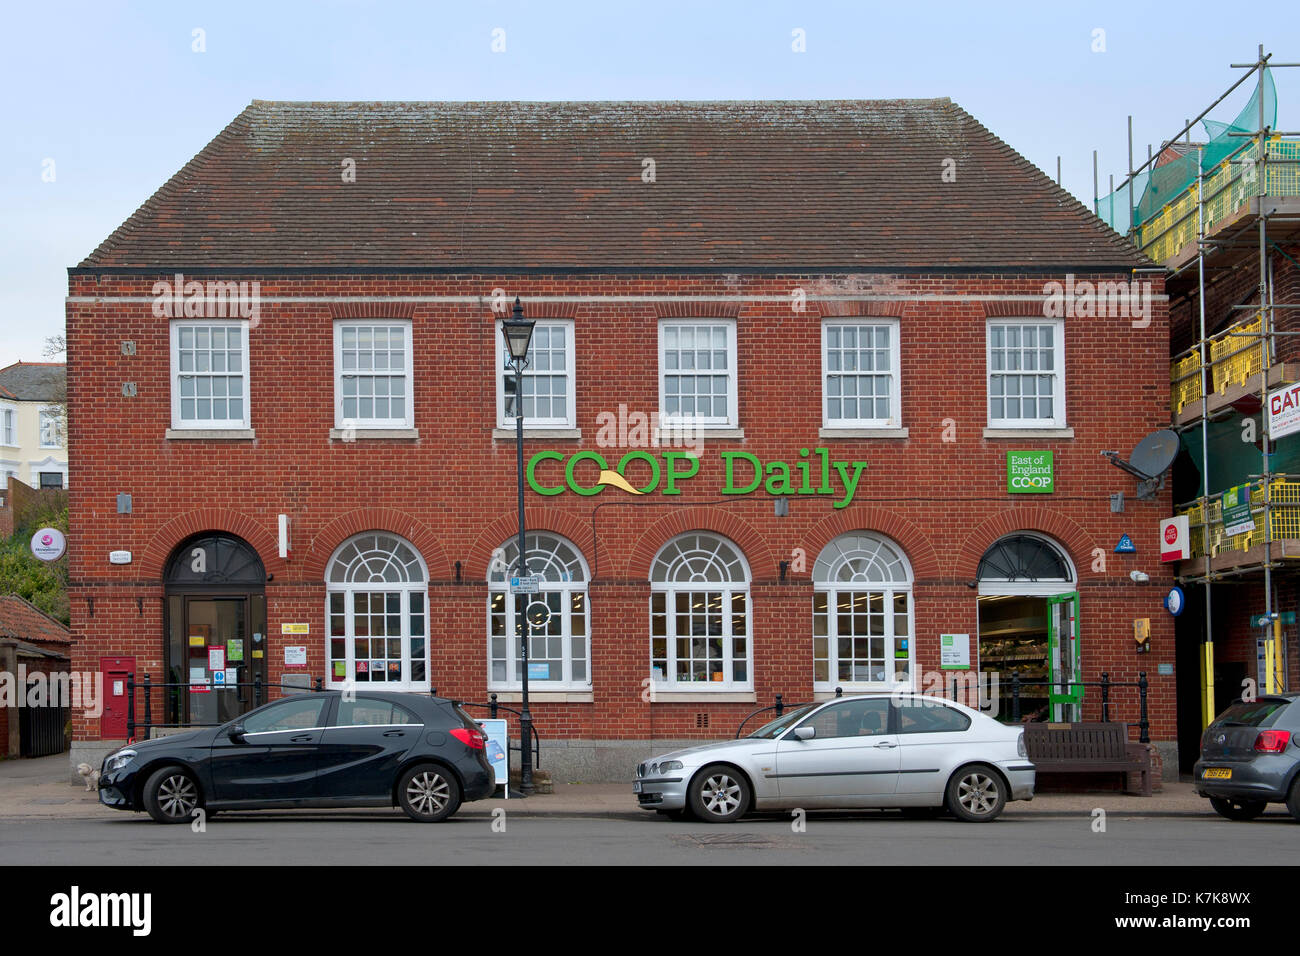 Co Op Daily Foodstore in Aldeburgh Suffolk UK Stock Photo